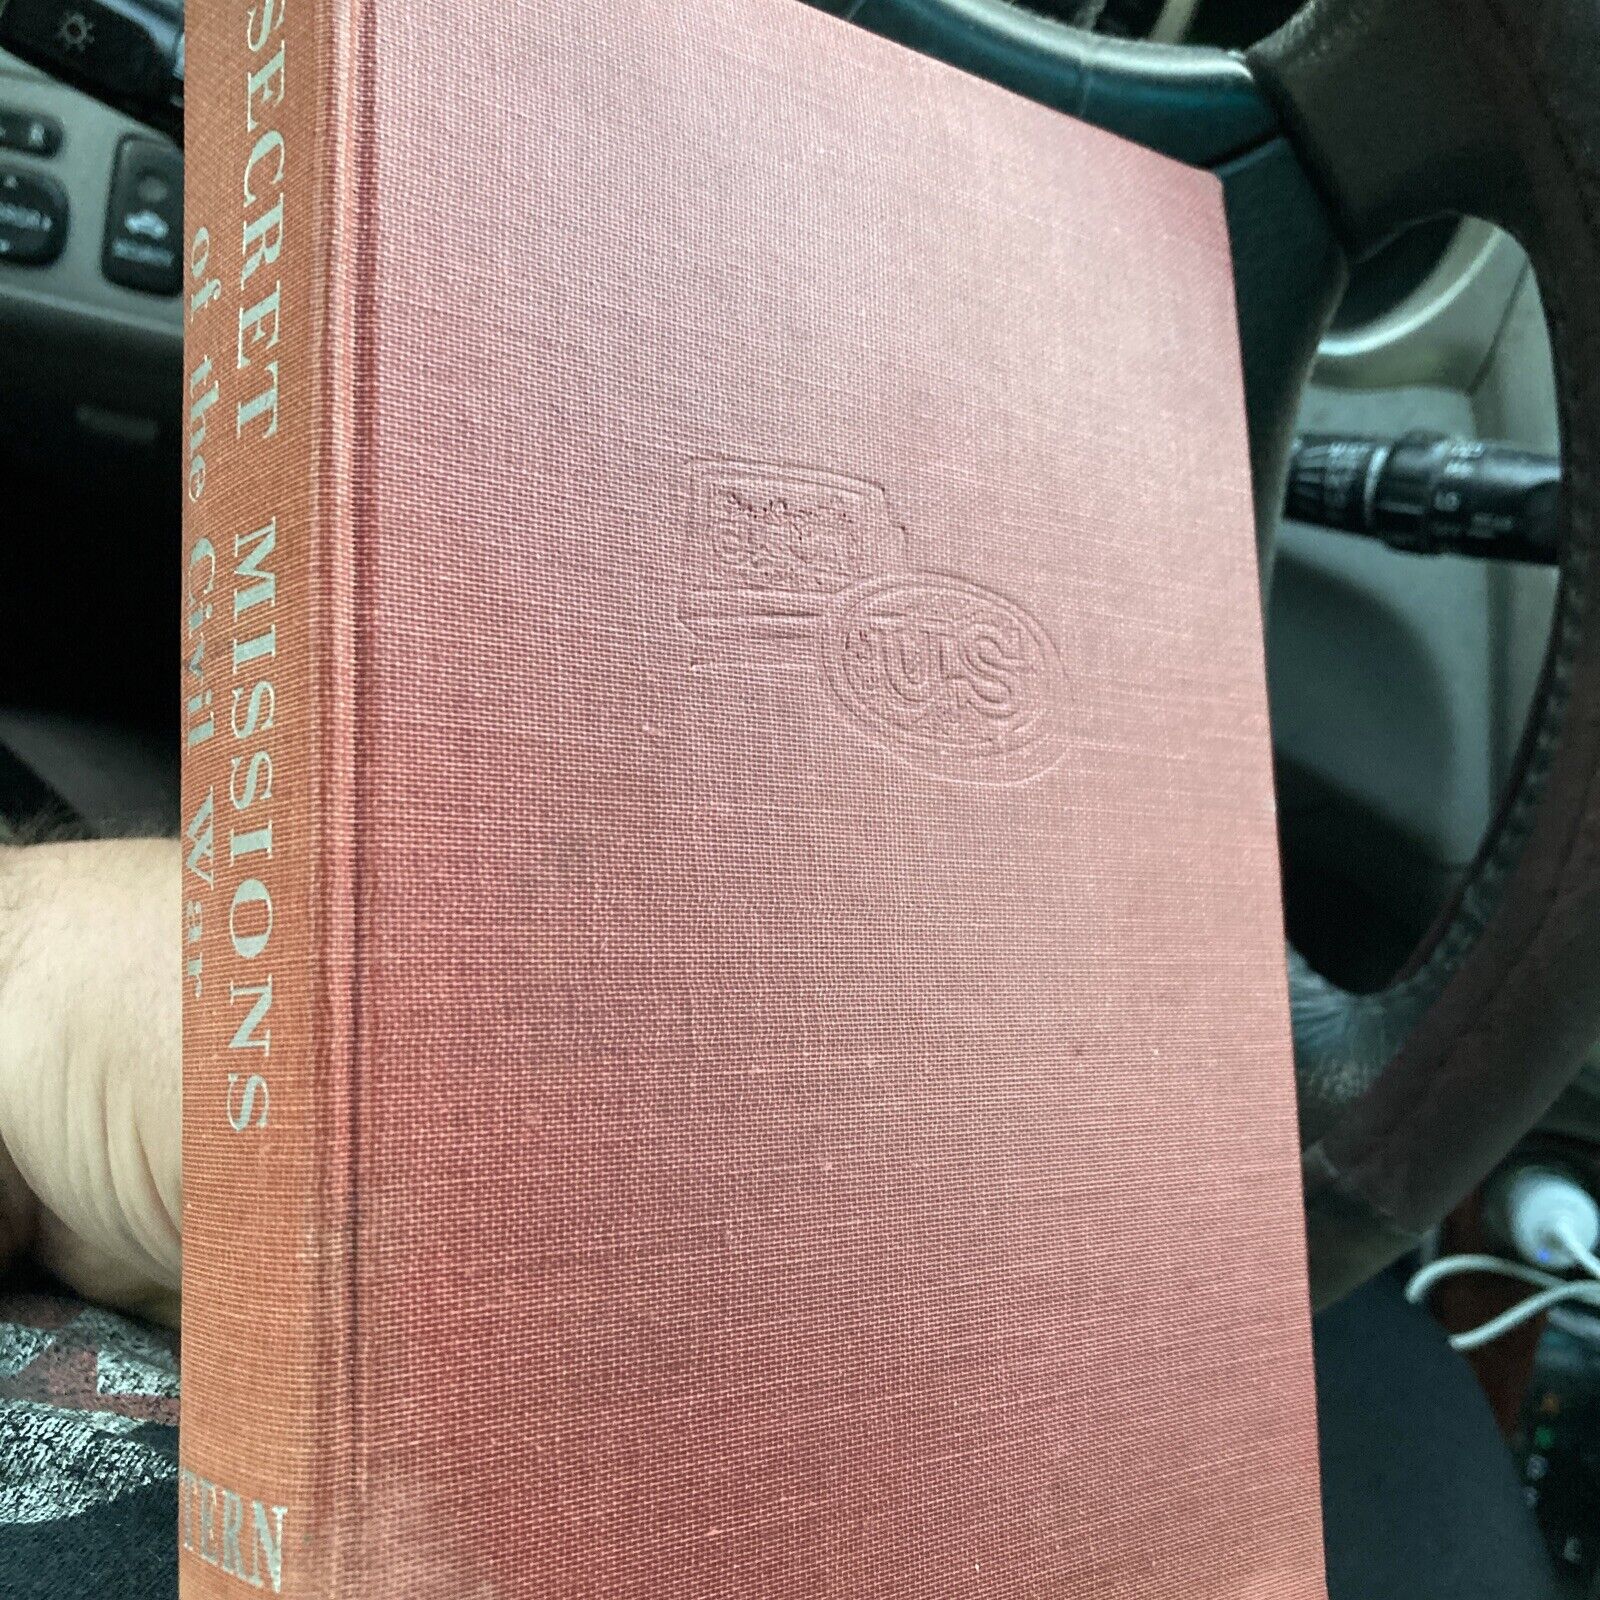 SECRET MISSIONS OF THE CIVIL WAR  by Stern Feb.1959 1st Printing Hardback Book